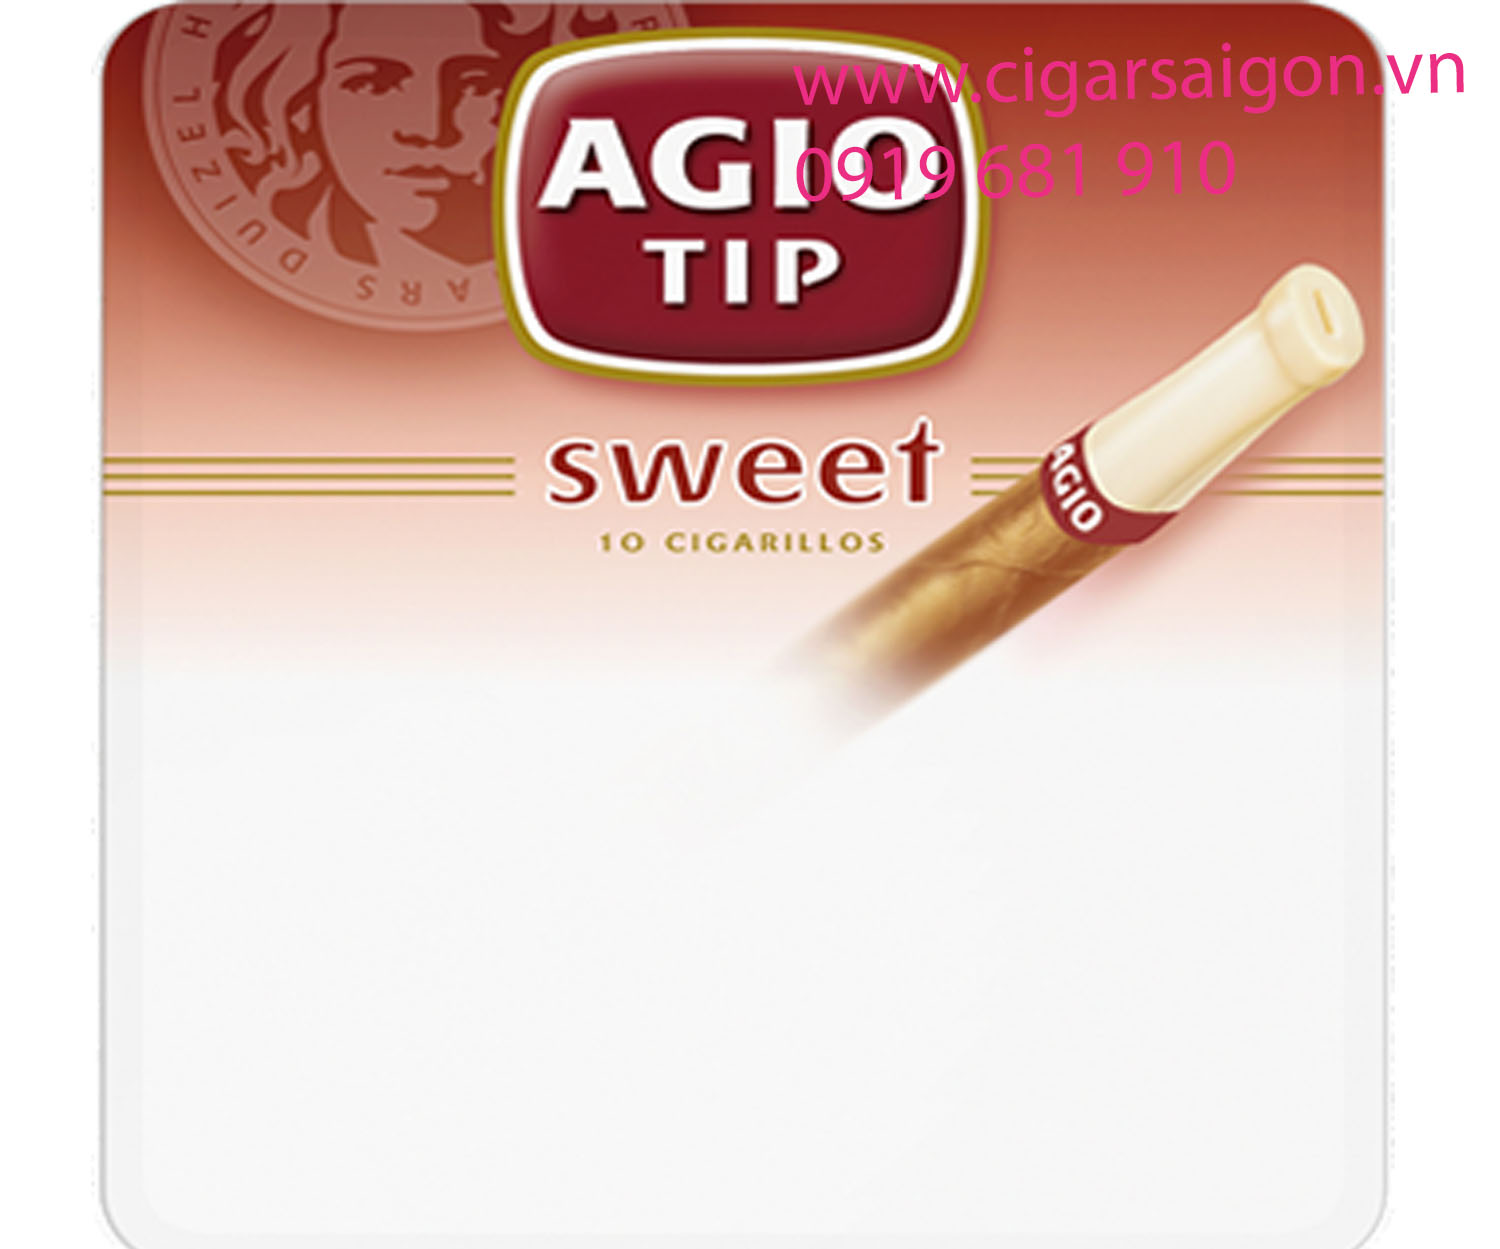 Xì gà Agio tip Sweet